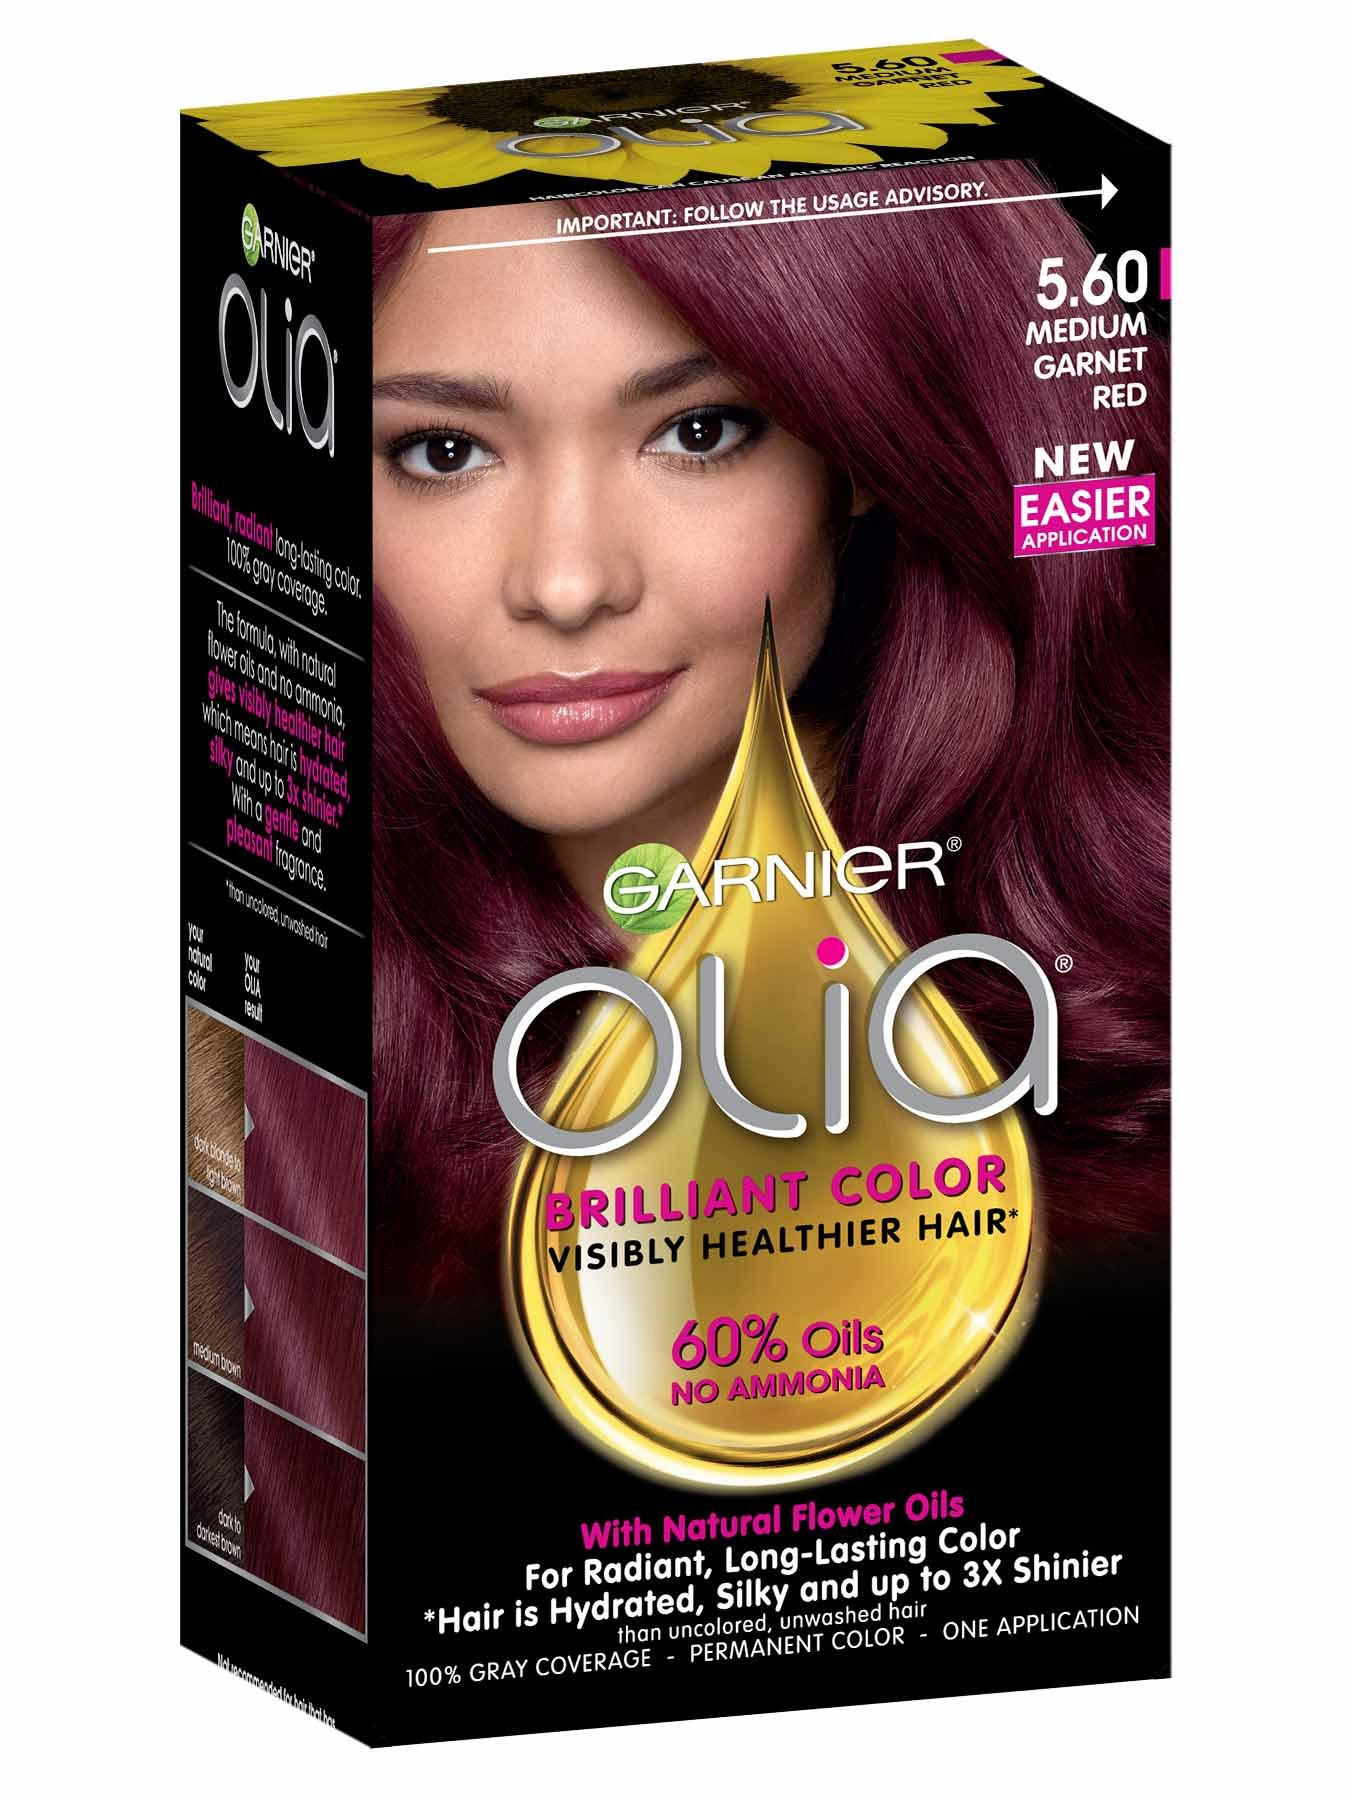 Olia Hair Color Chart tlhwebdesigns